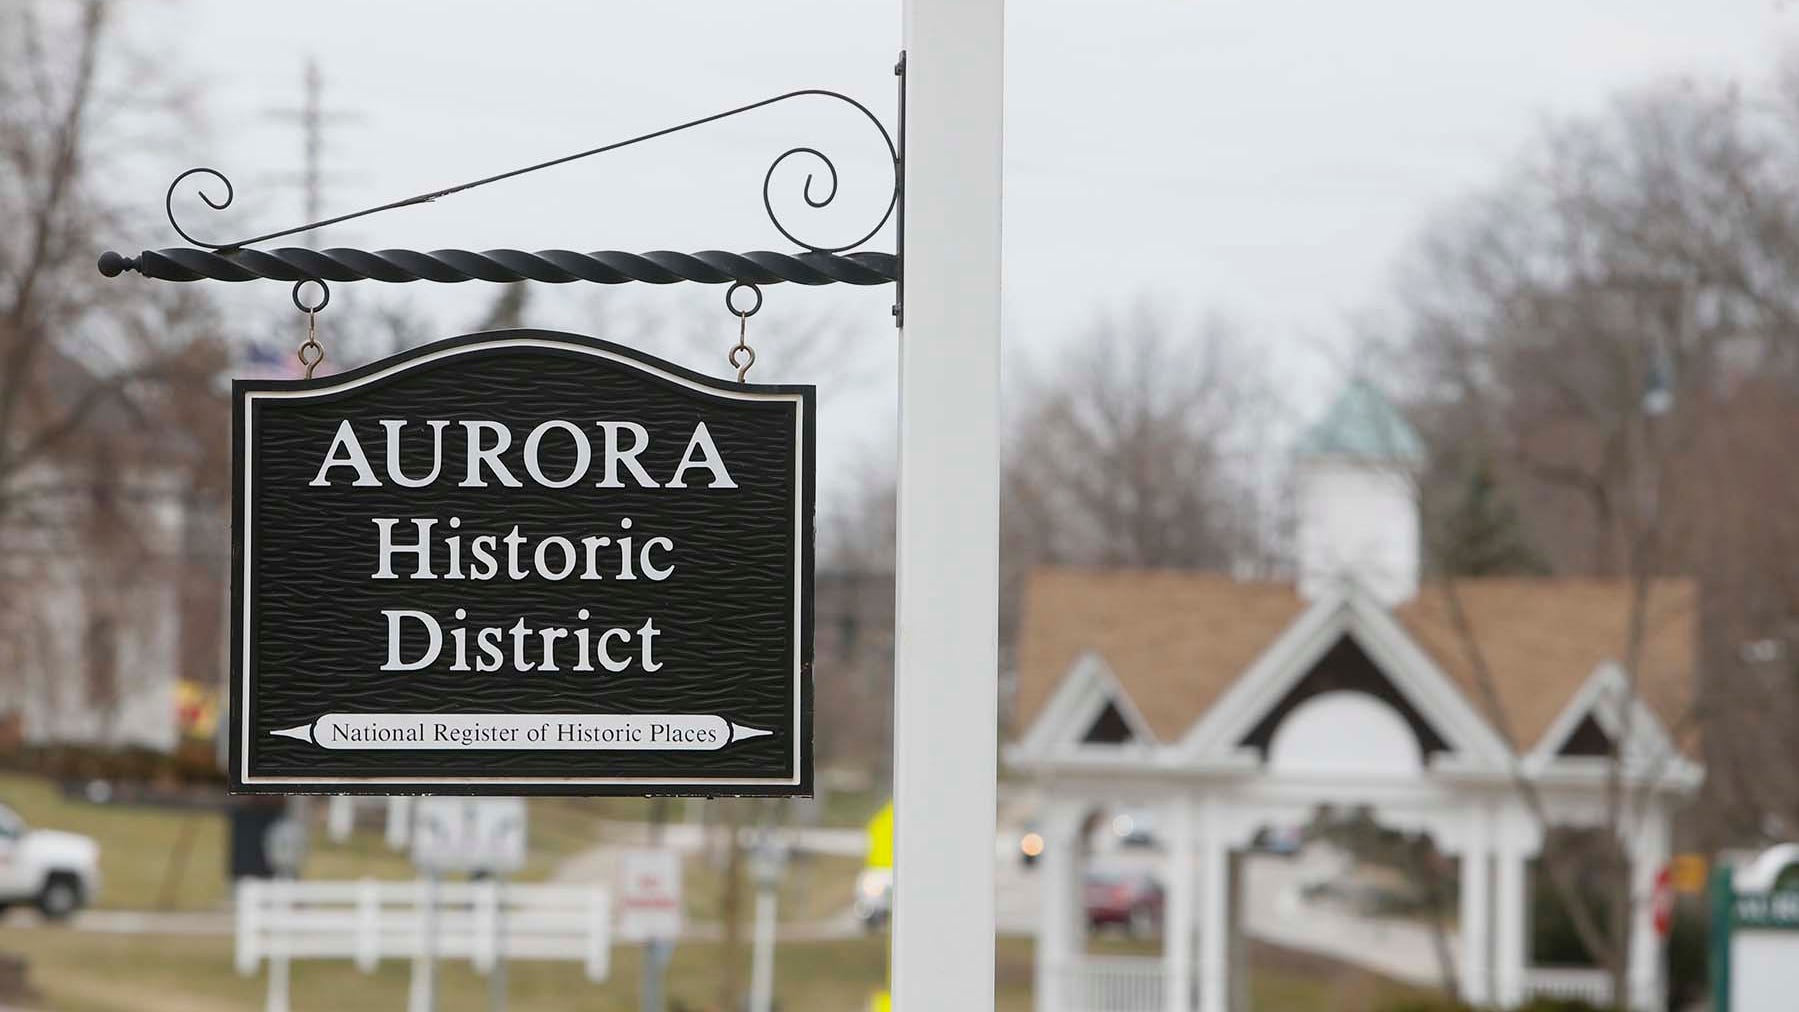  Community Spotlight: Shop for treasures, enjoy natural treasures in Aurora 